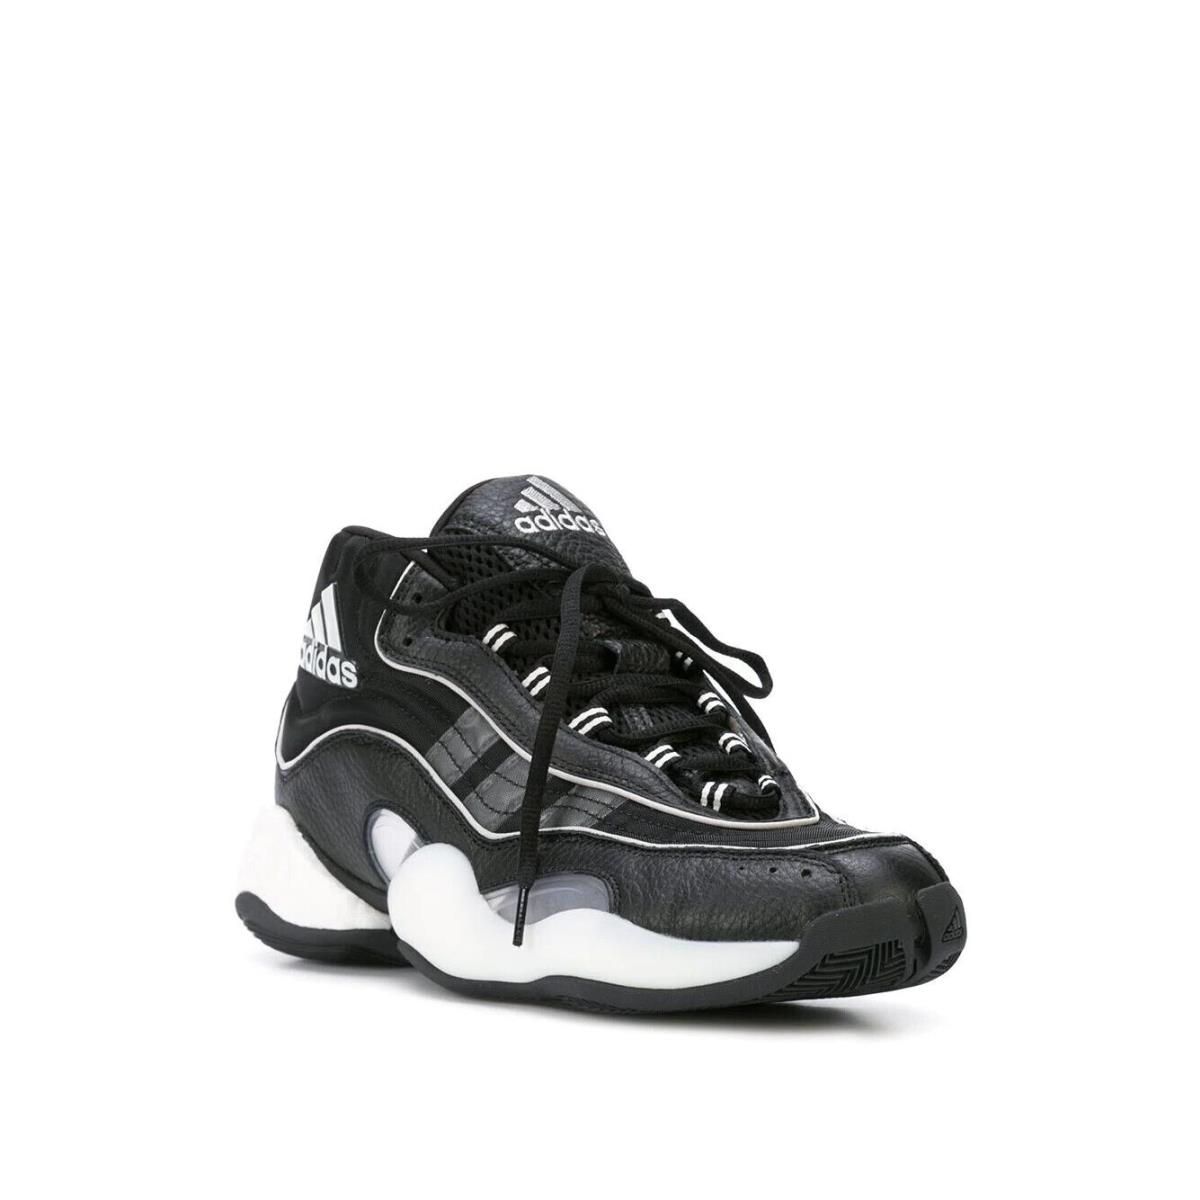 Men`s Adidas 98 Crazy Byw `core Black` Athletic Fashion Shoes G26807